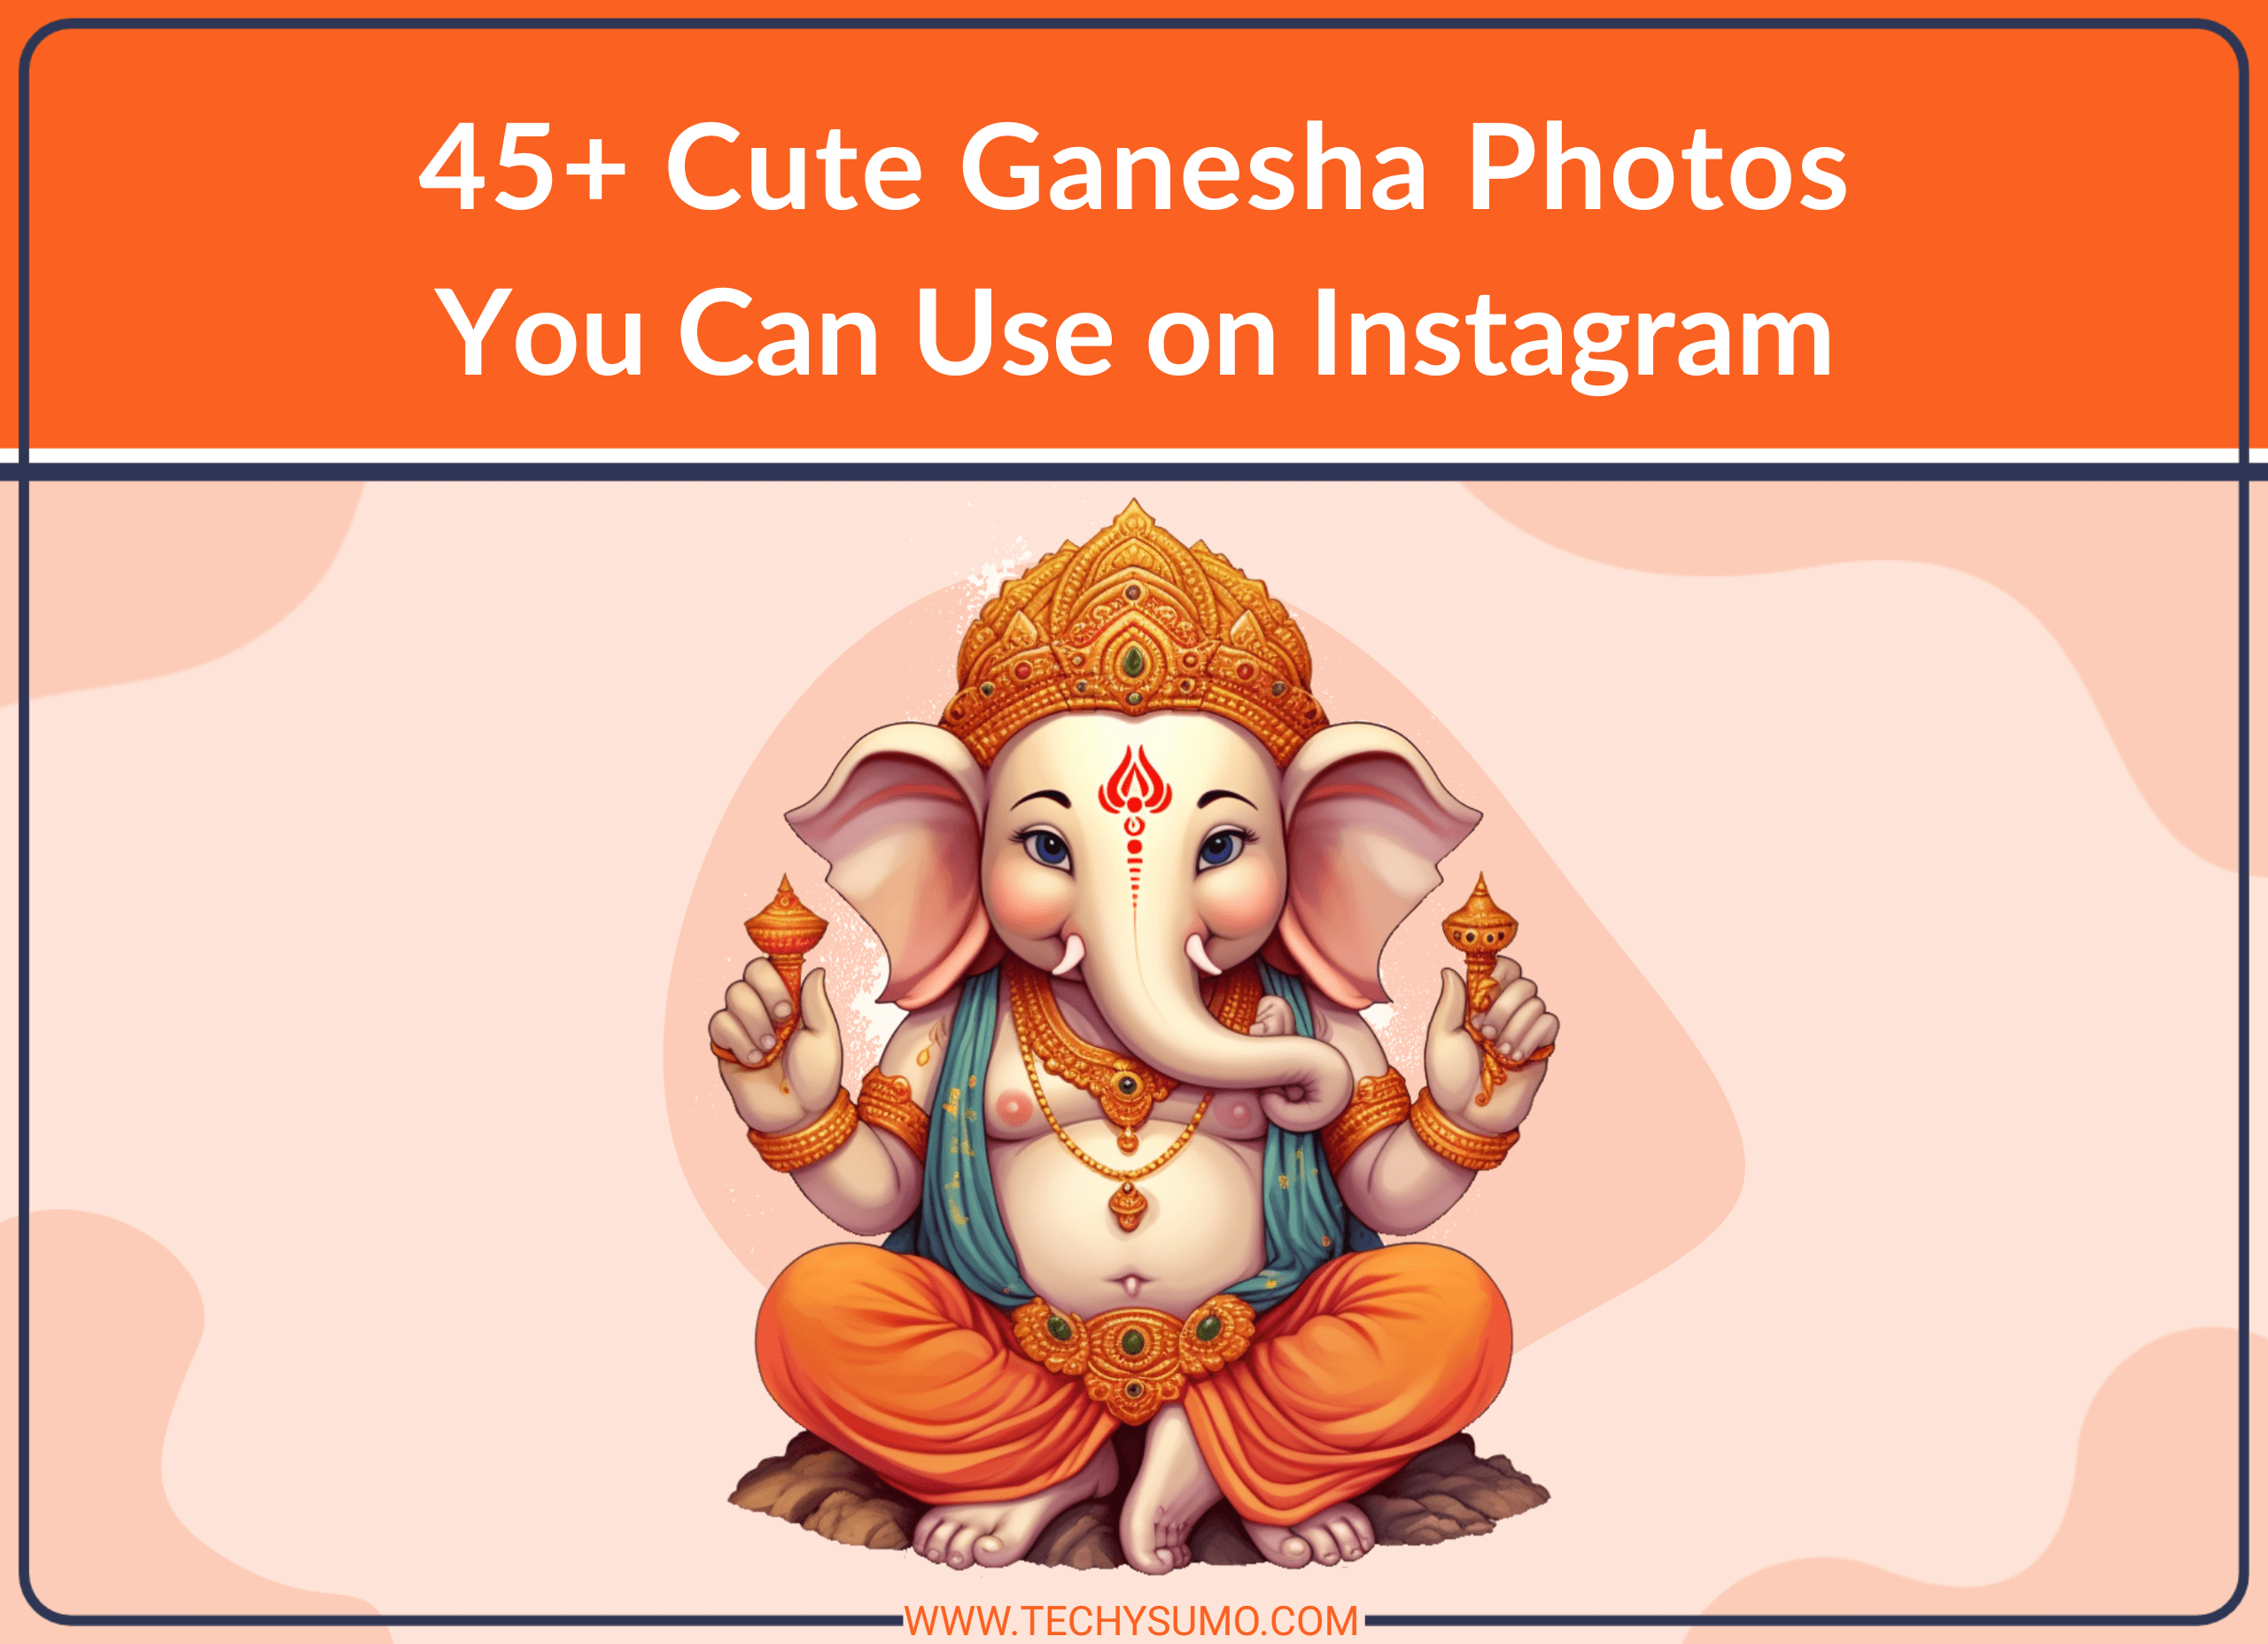 45+ Cute Ganesha Photos You Can Use on Instagram